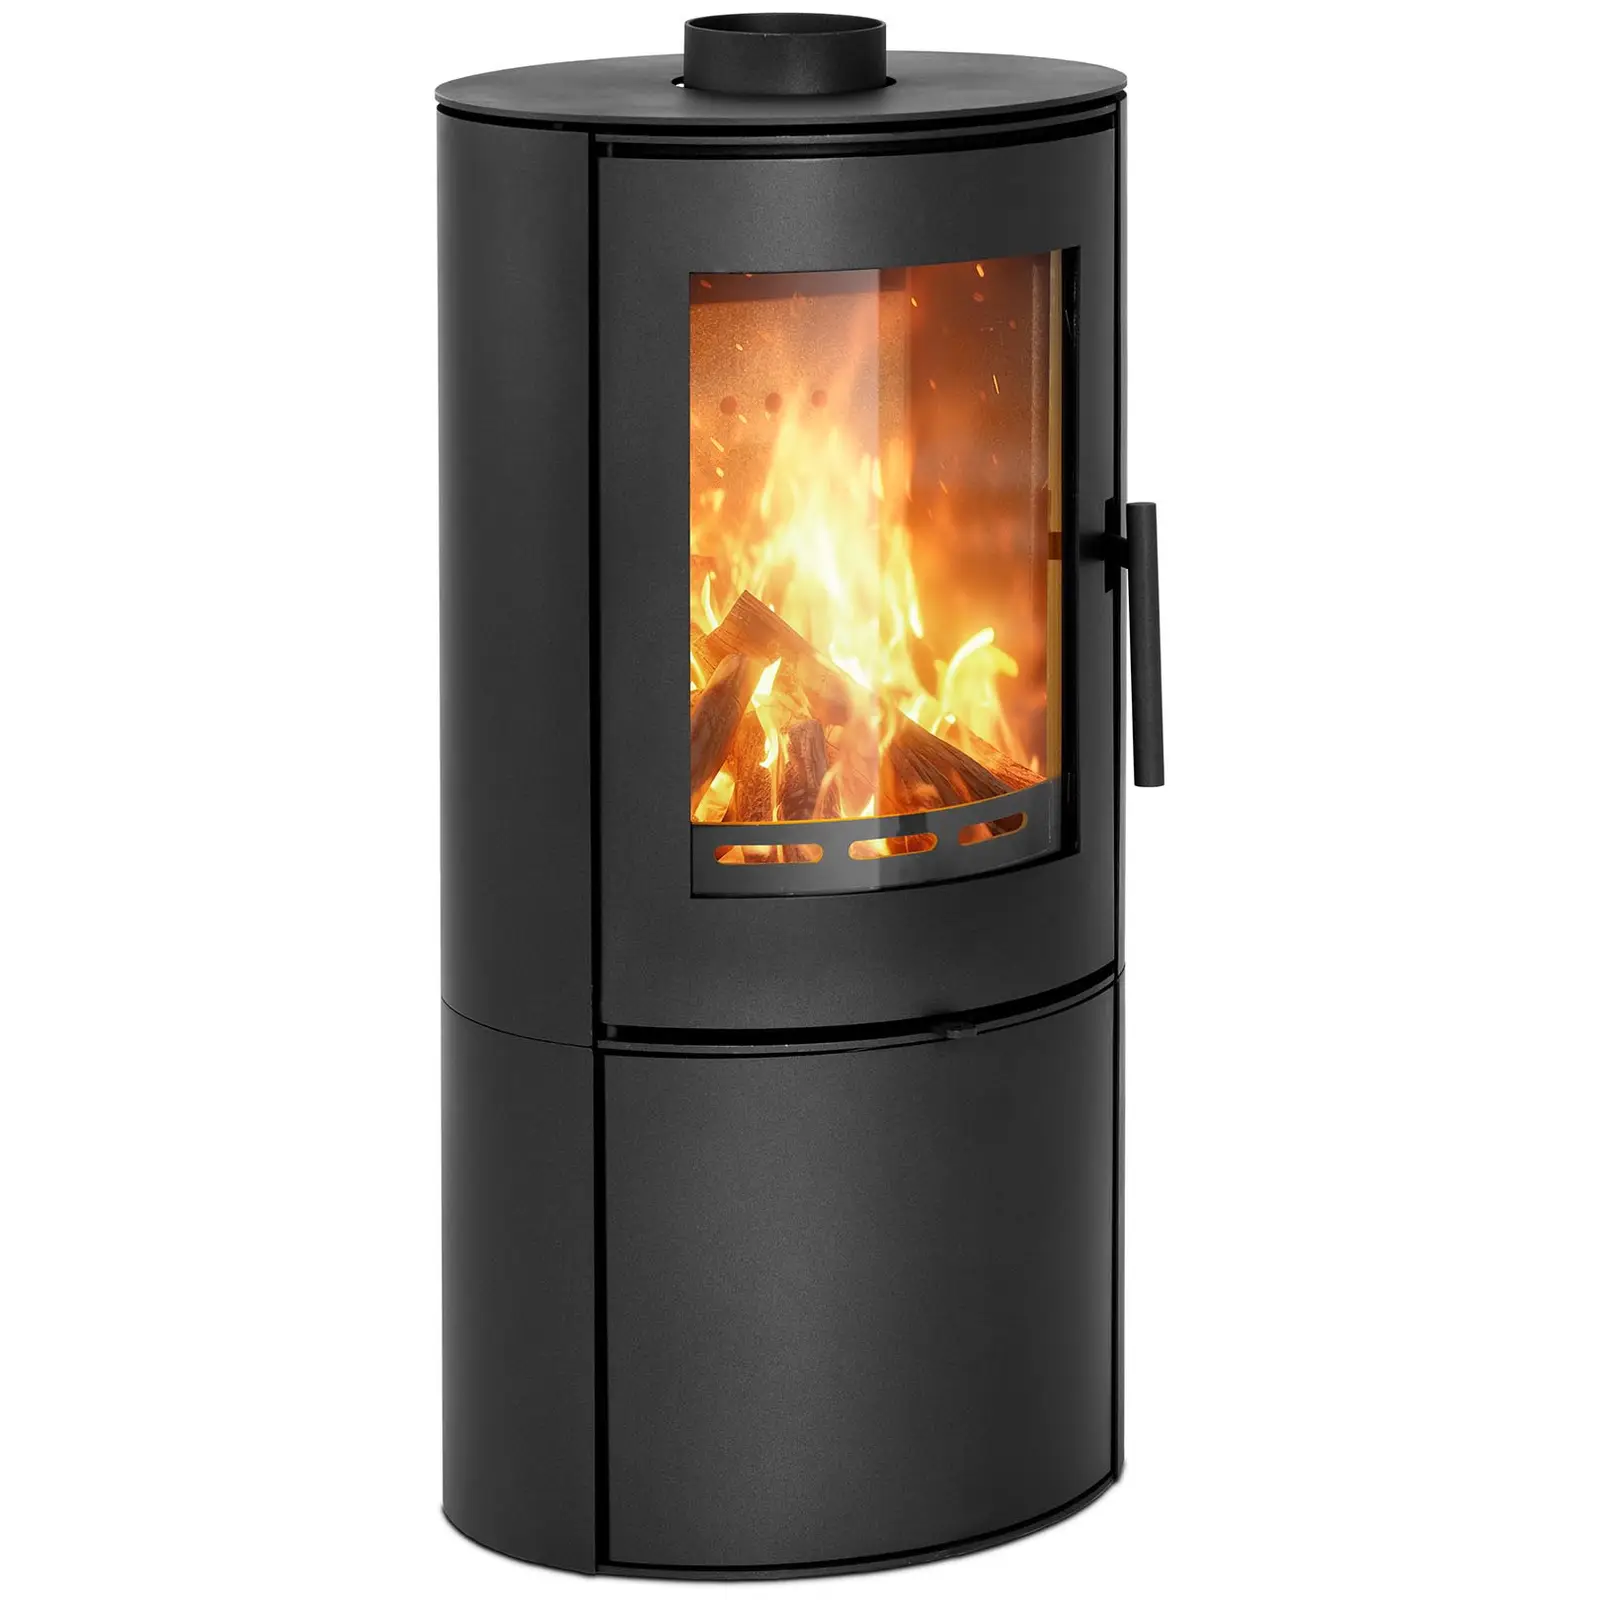 Fireplace stove - maximum output 7.2 kW - very efficient - adjustable ventilation - for 48 - 115 m³ - BImSchV 2